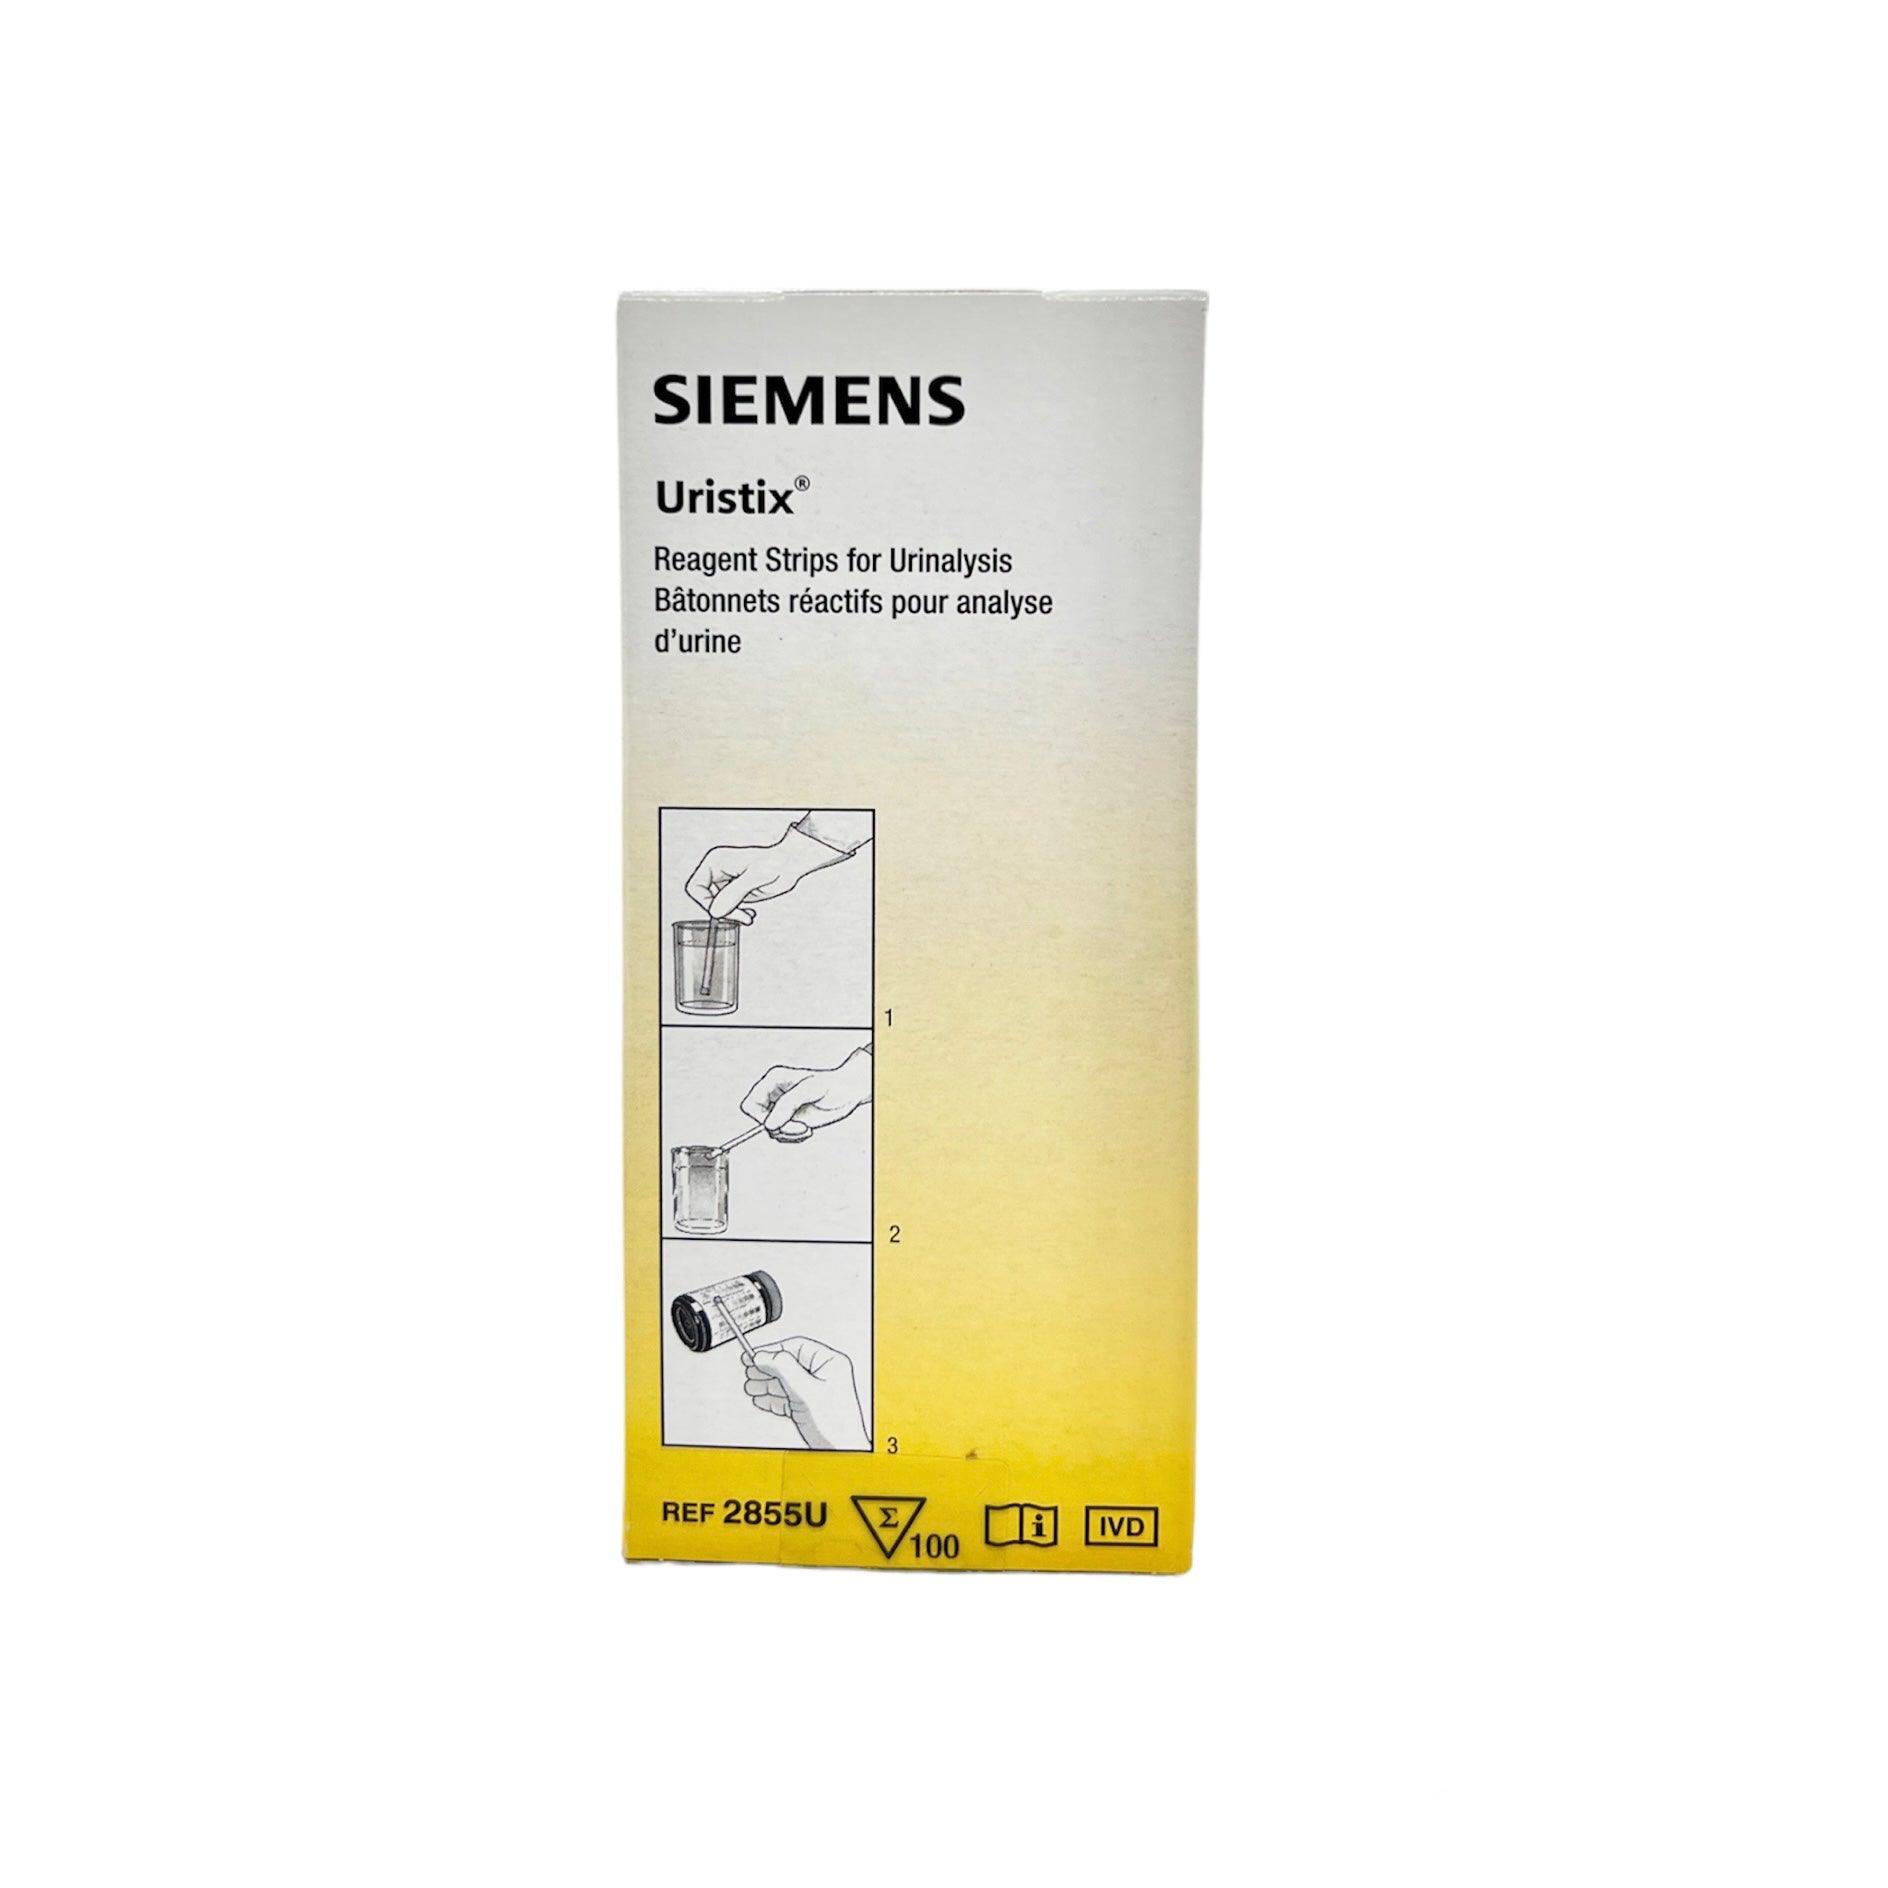 Siemens Uristix Reagent Strips for Urinalysis Tests (100 Strips/Box)